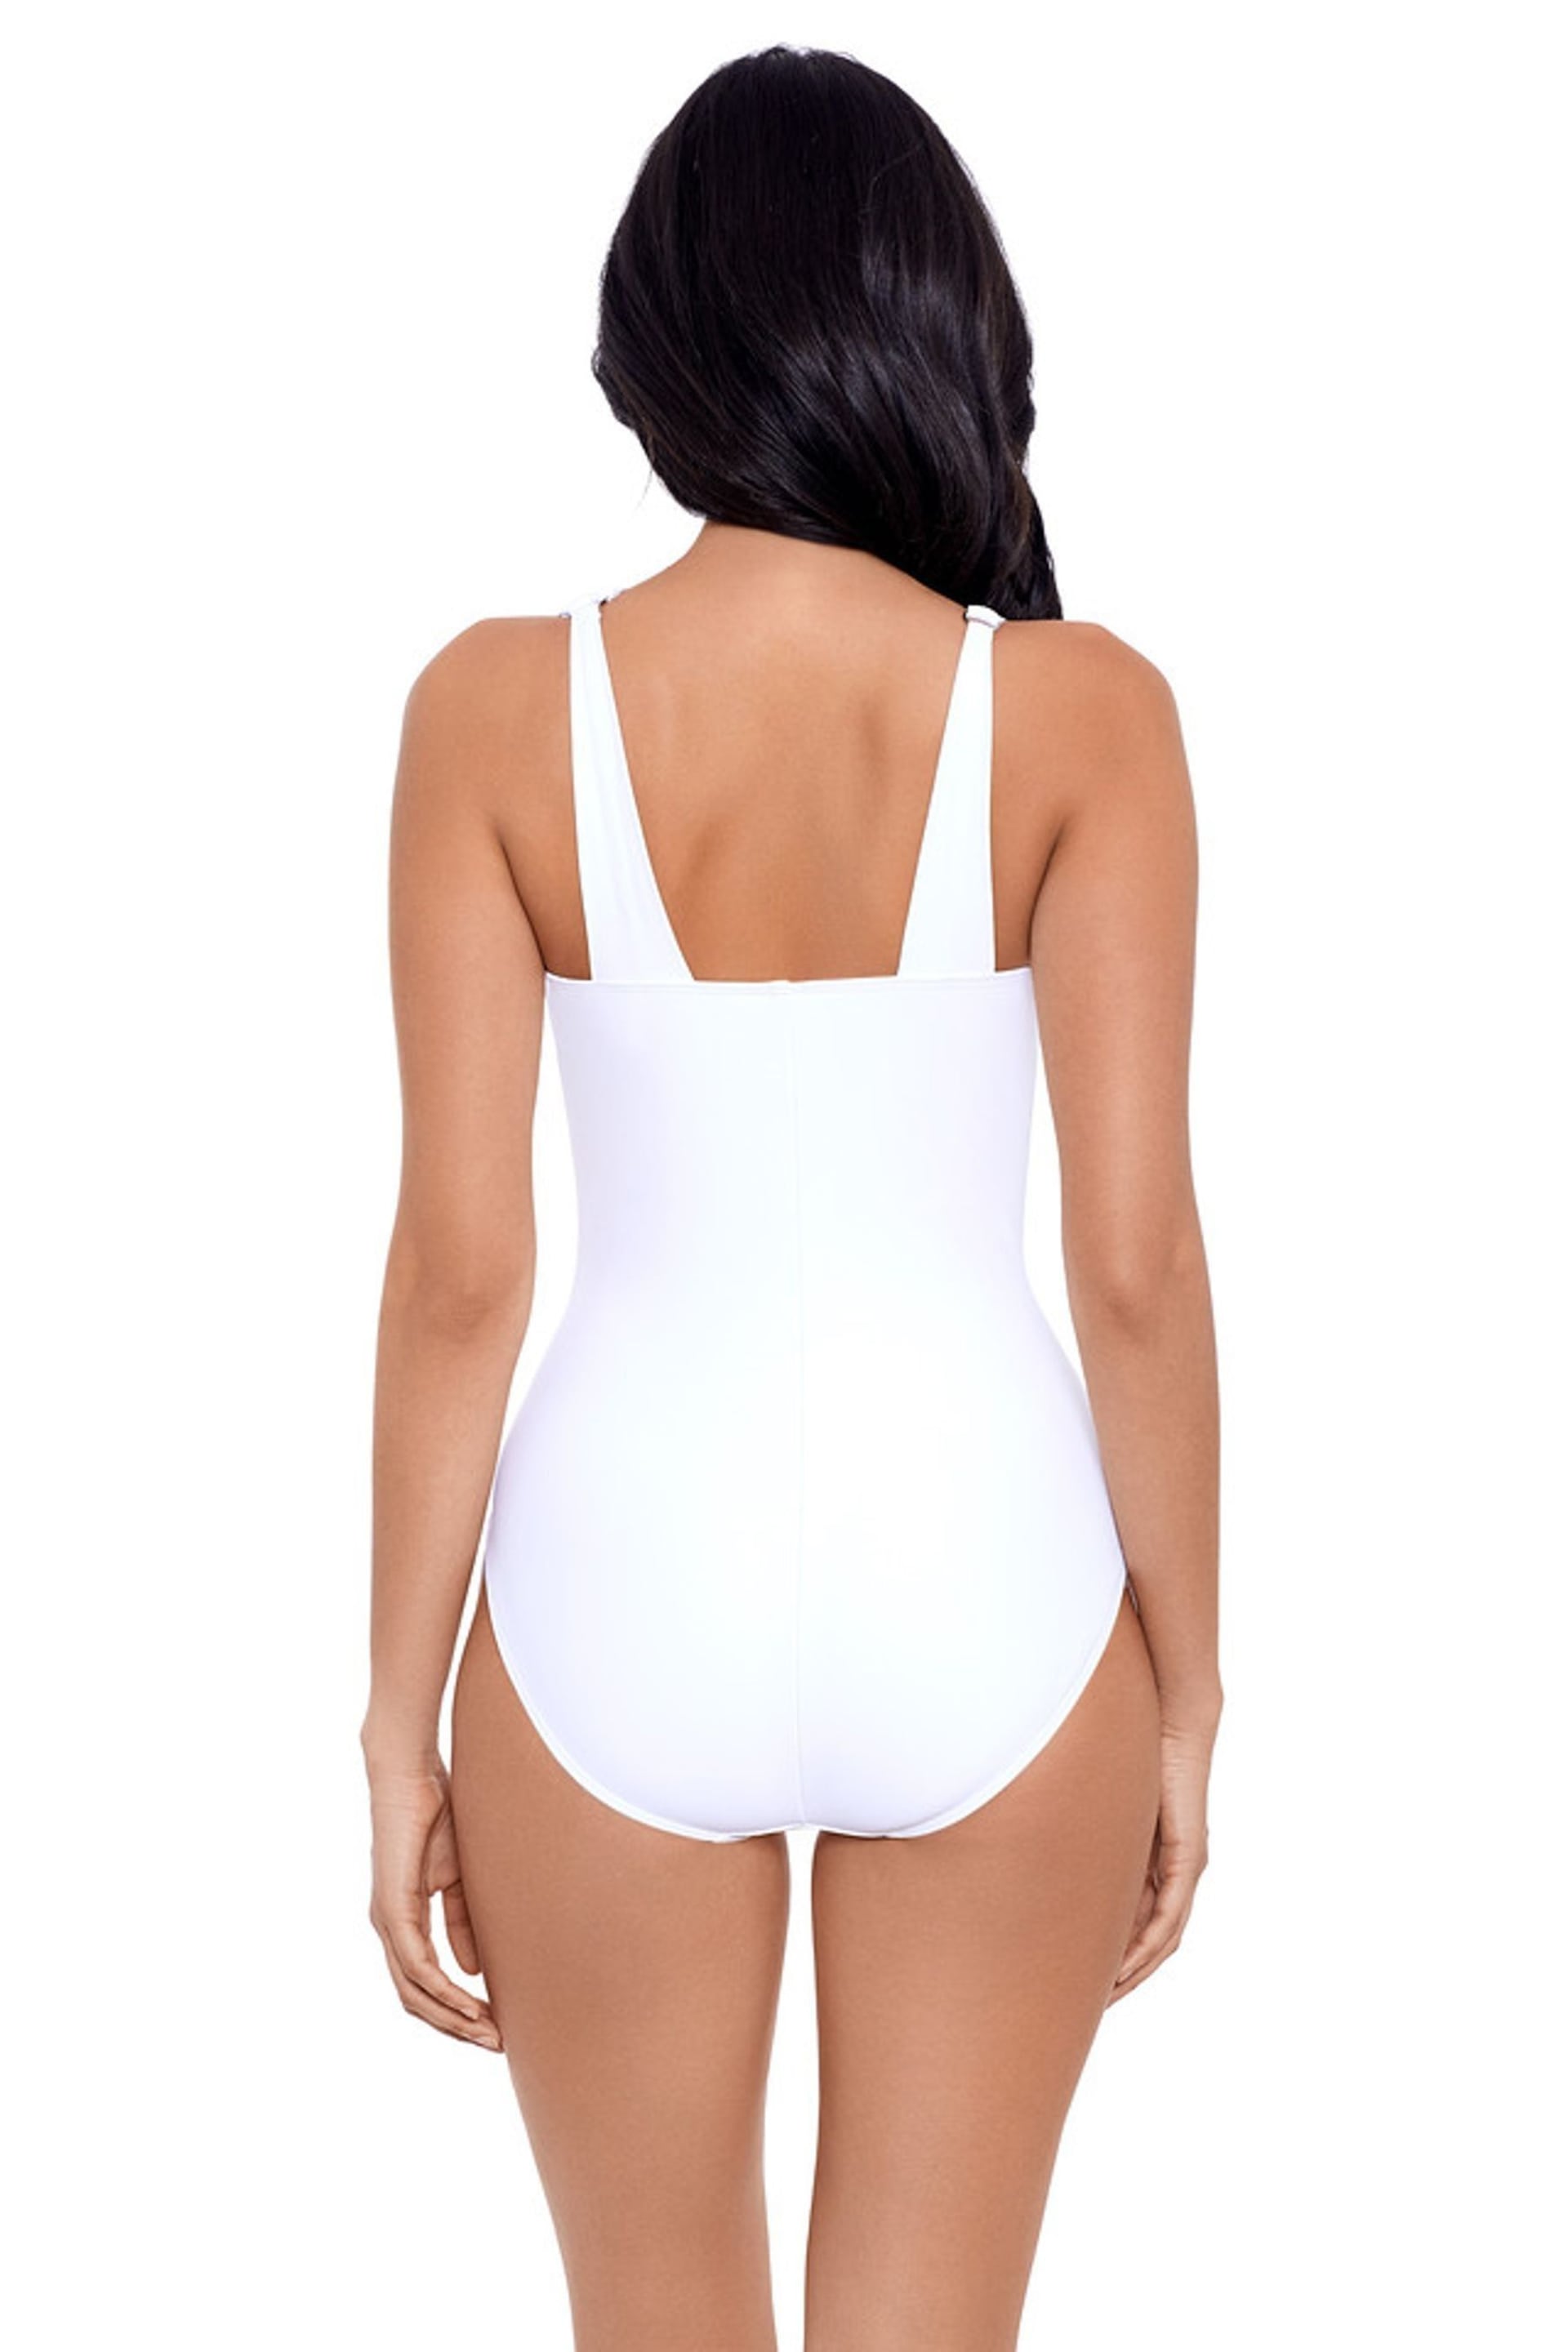 Miraclesuit Azura Tummy Control Network White Swimsuit - Image 3 of 5